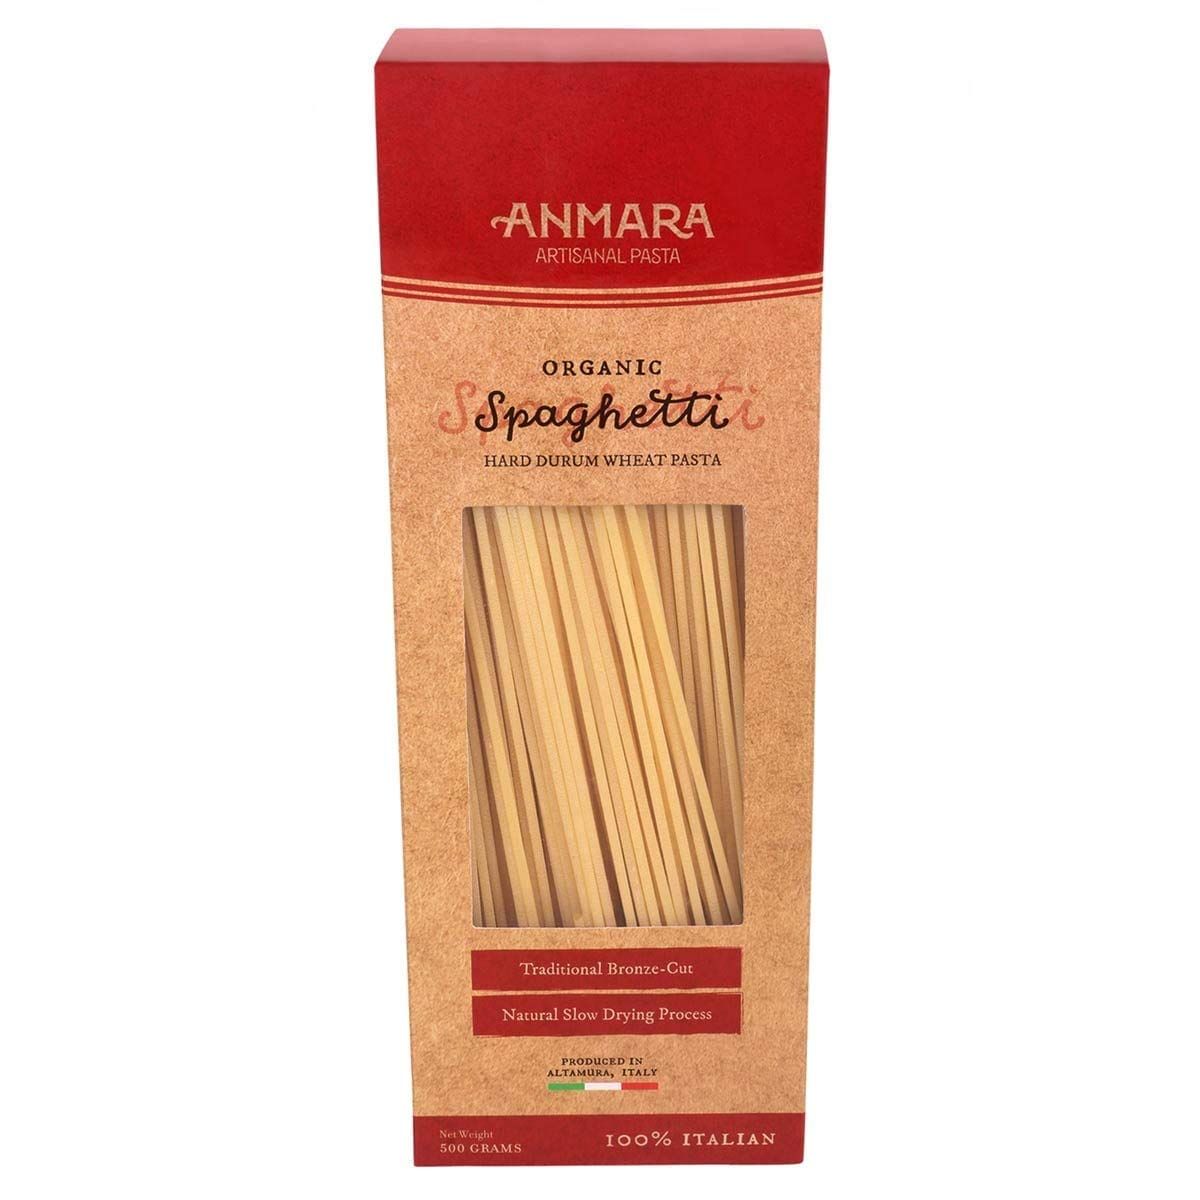 Anmara Artisanal Pasta Organic Spaghetti Image